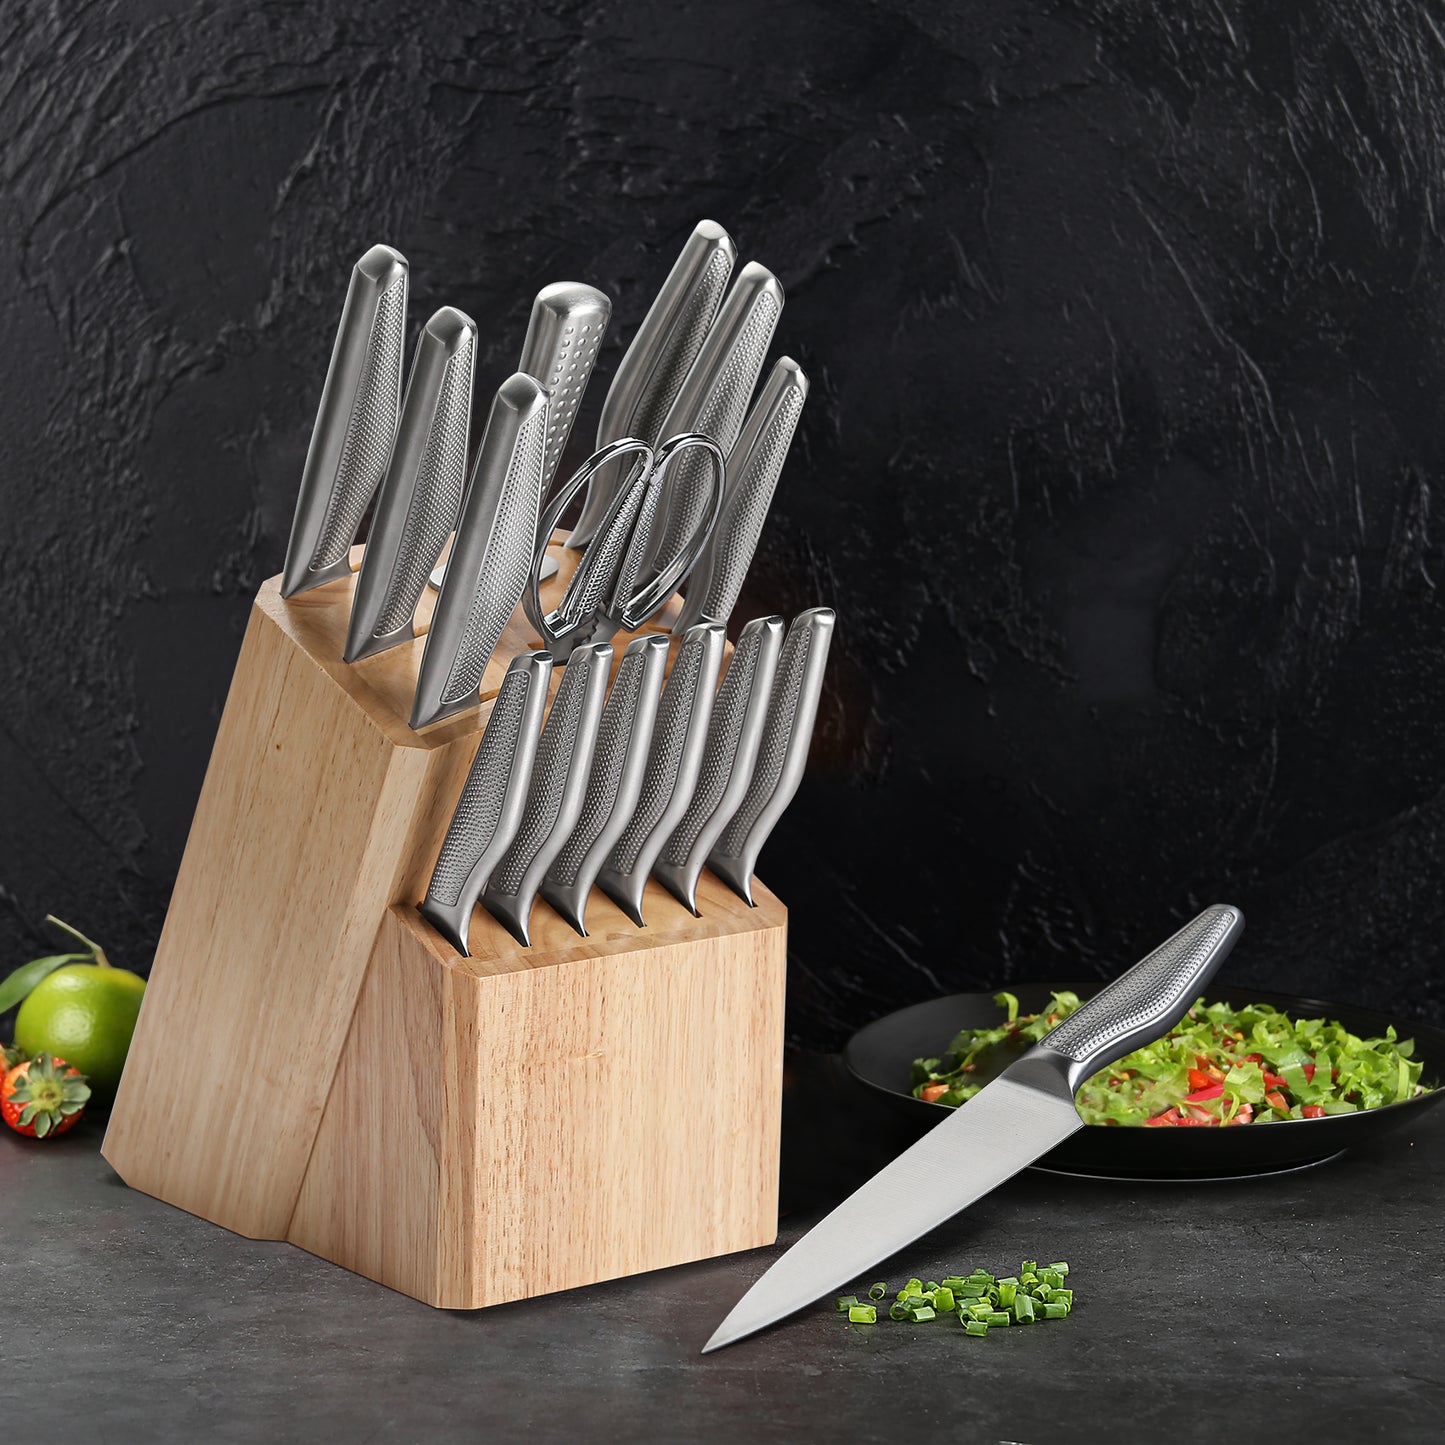 Japanese Steel Kitchen Knife Set